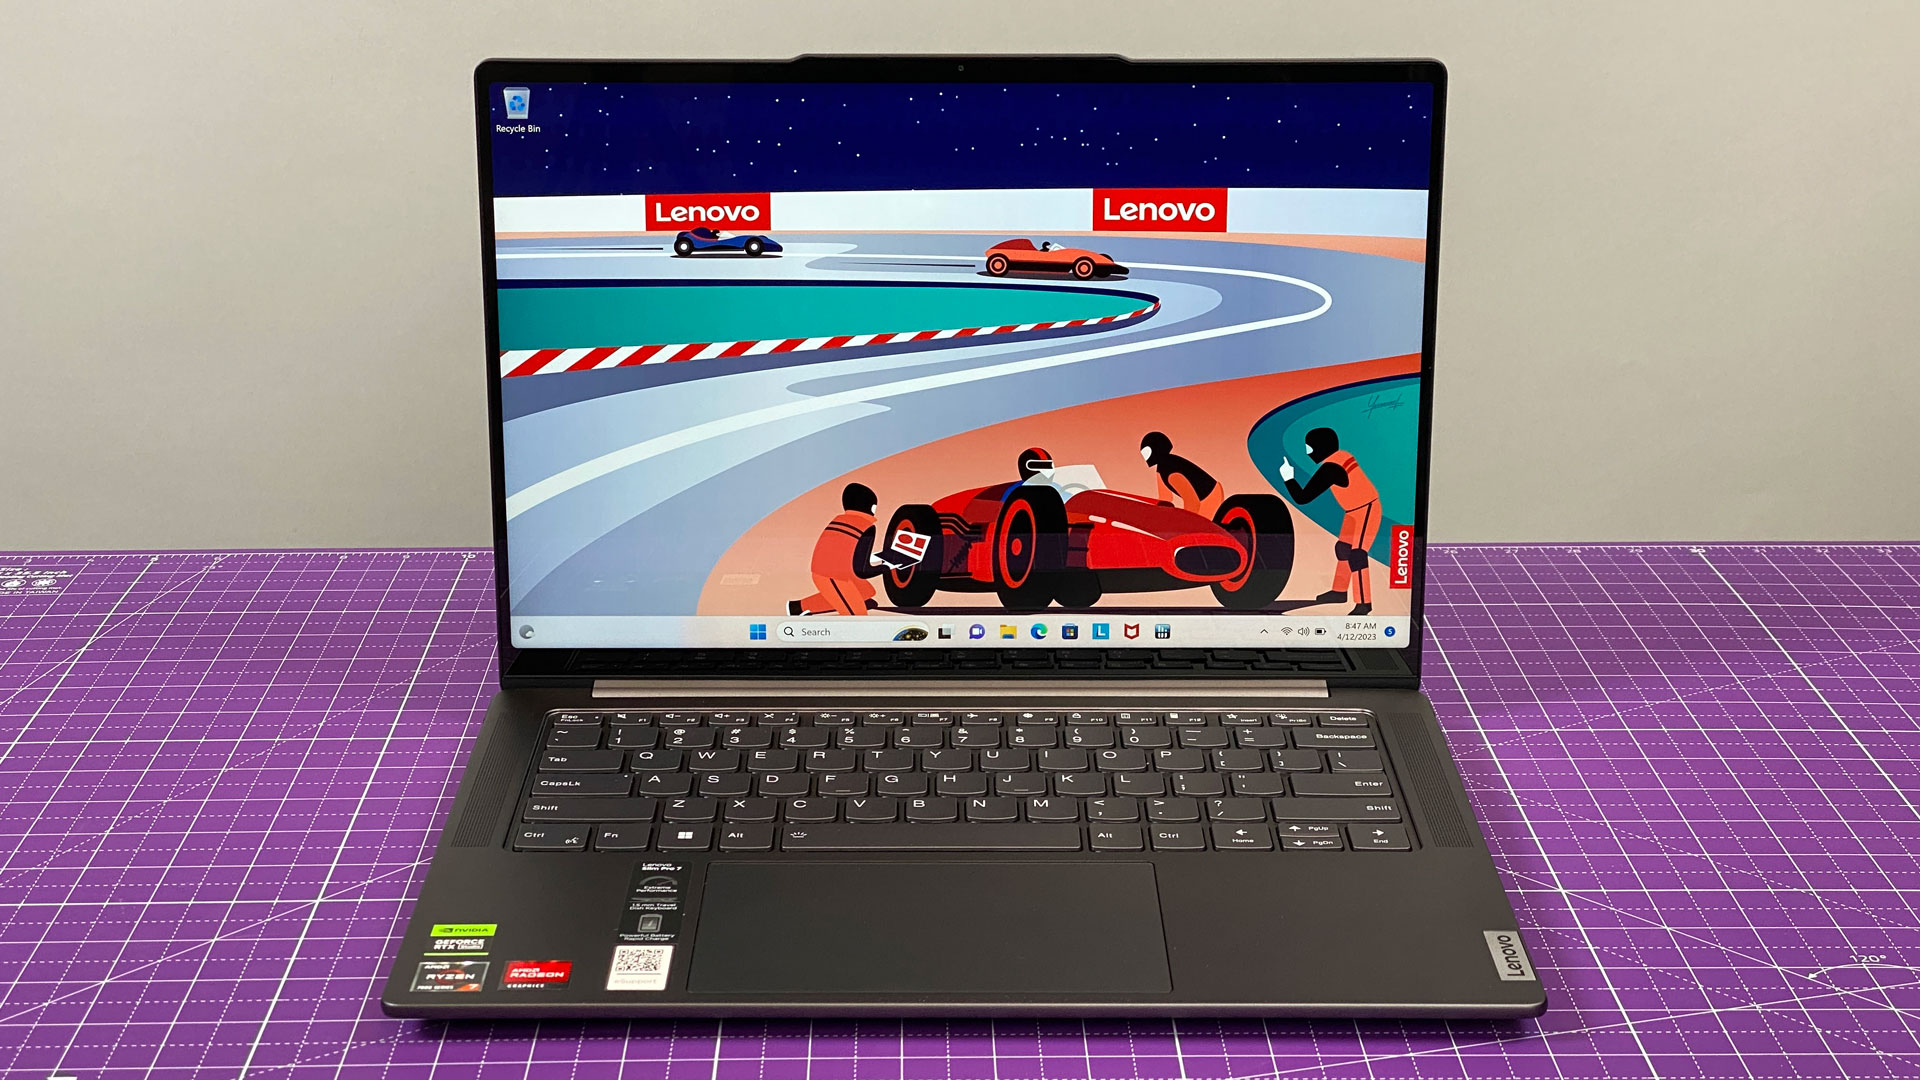 REVIEW: Lenovo Yoga Slim 7 Gen 8 - AMAZING Display + Battery Life